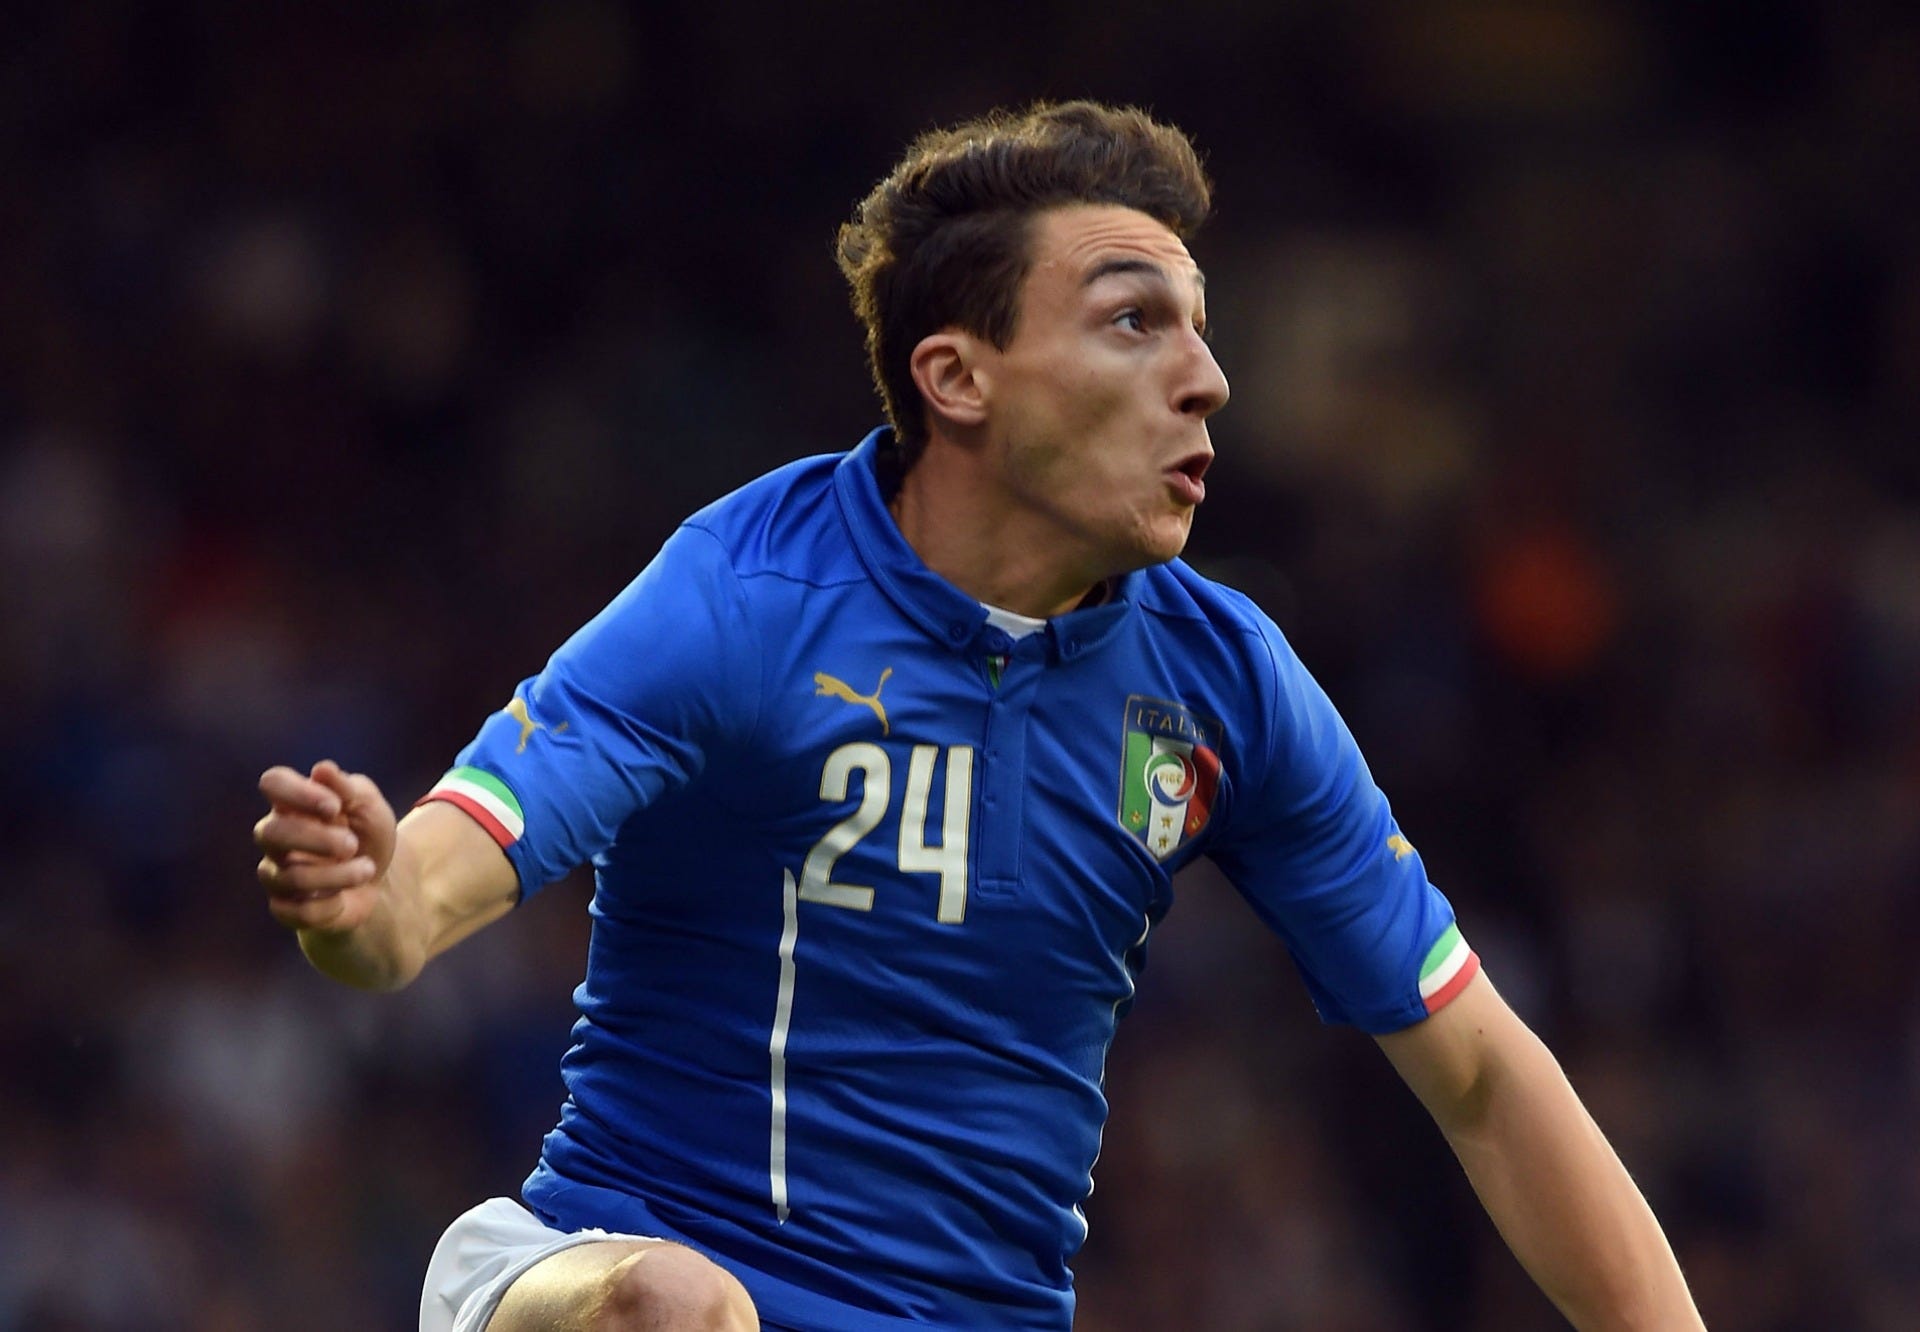 Matteo Darmian / Italy Ireland / Friendly Match